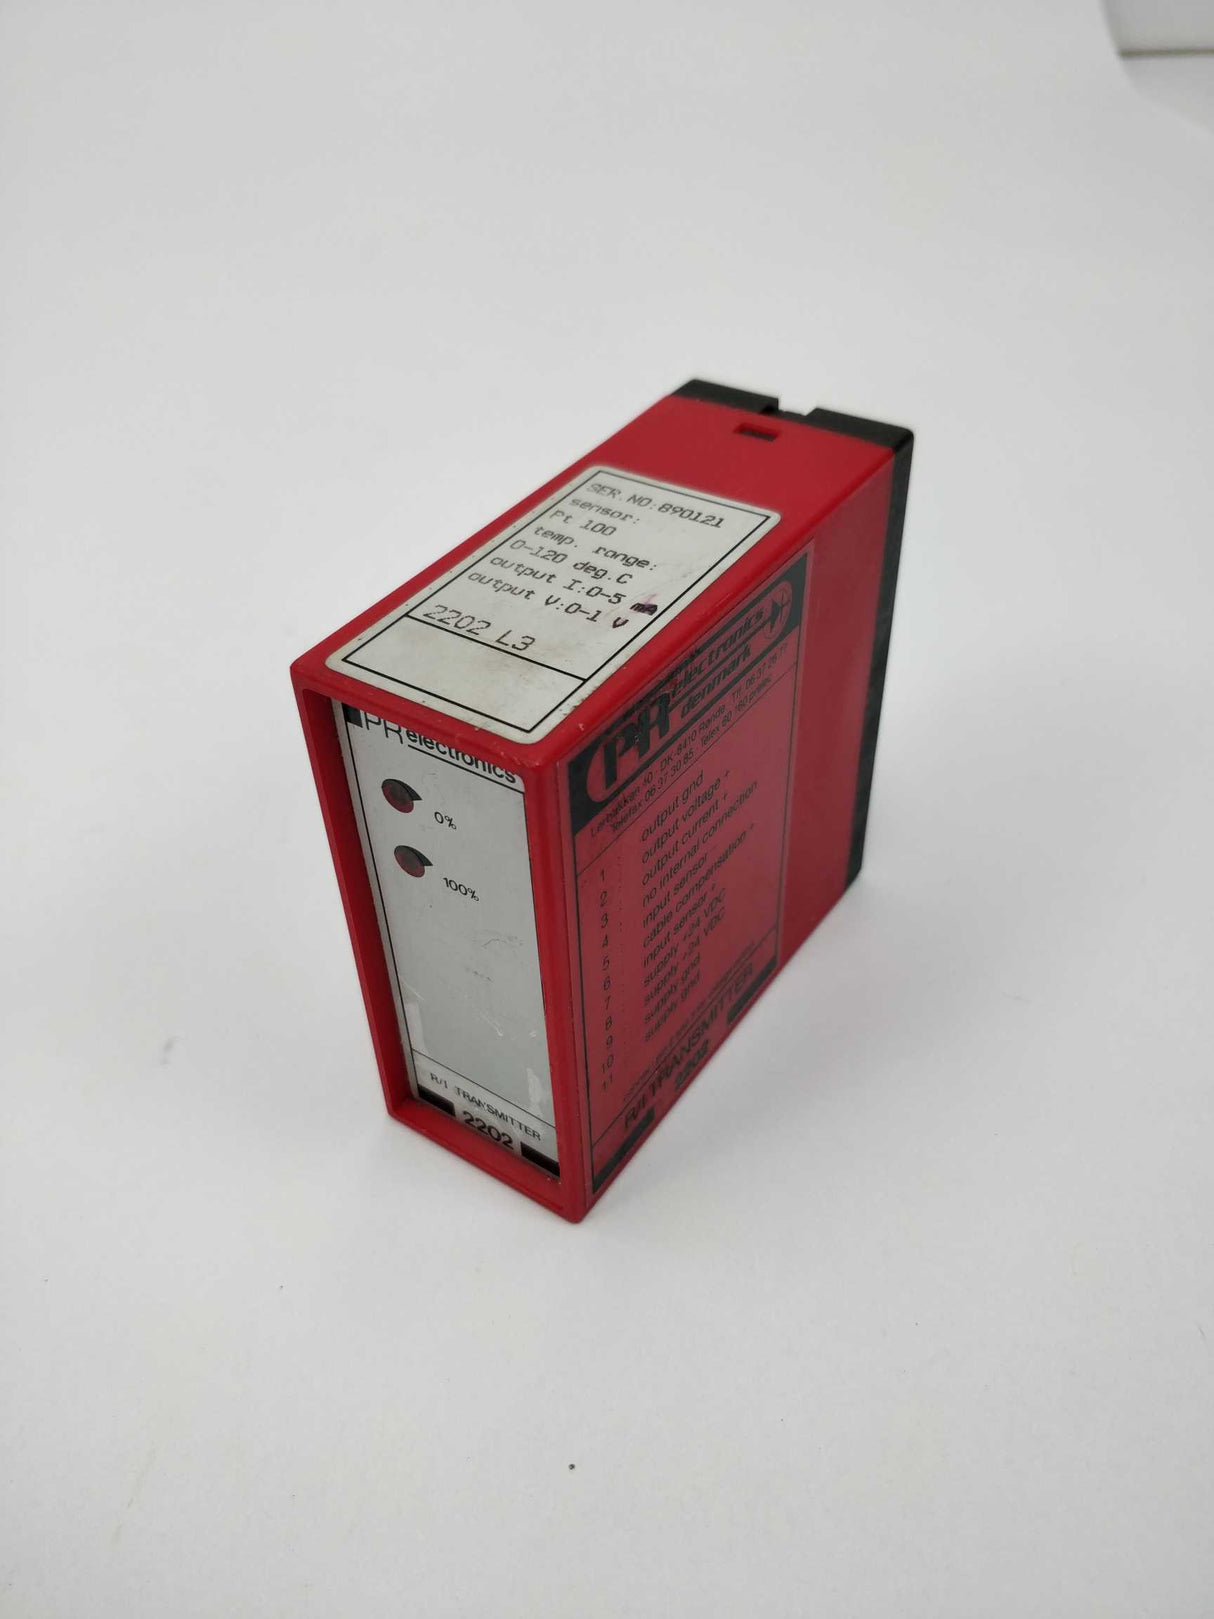 PR Electronics 2202 L3 Serial No. 890121 R/I Transmitter